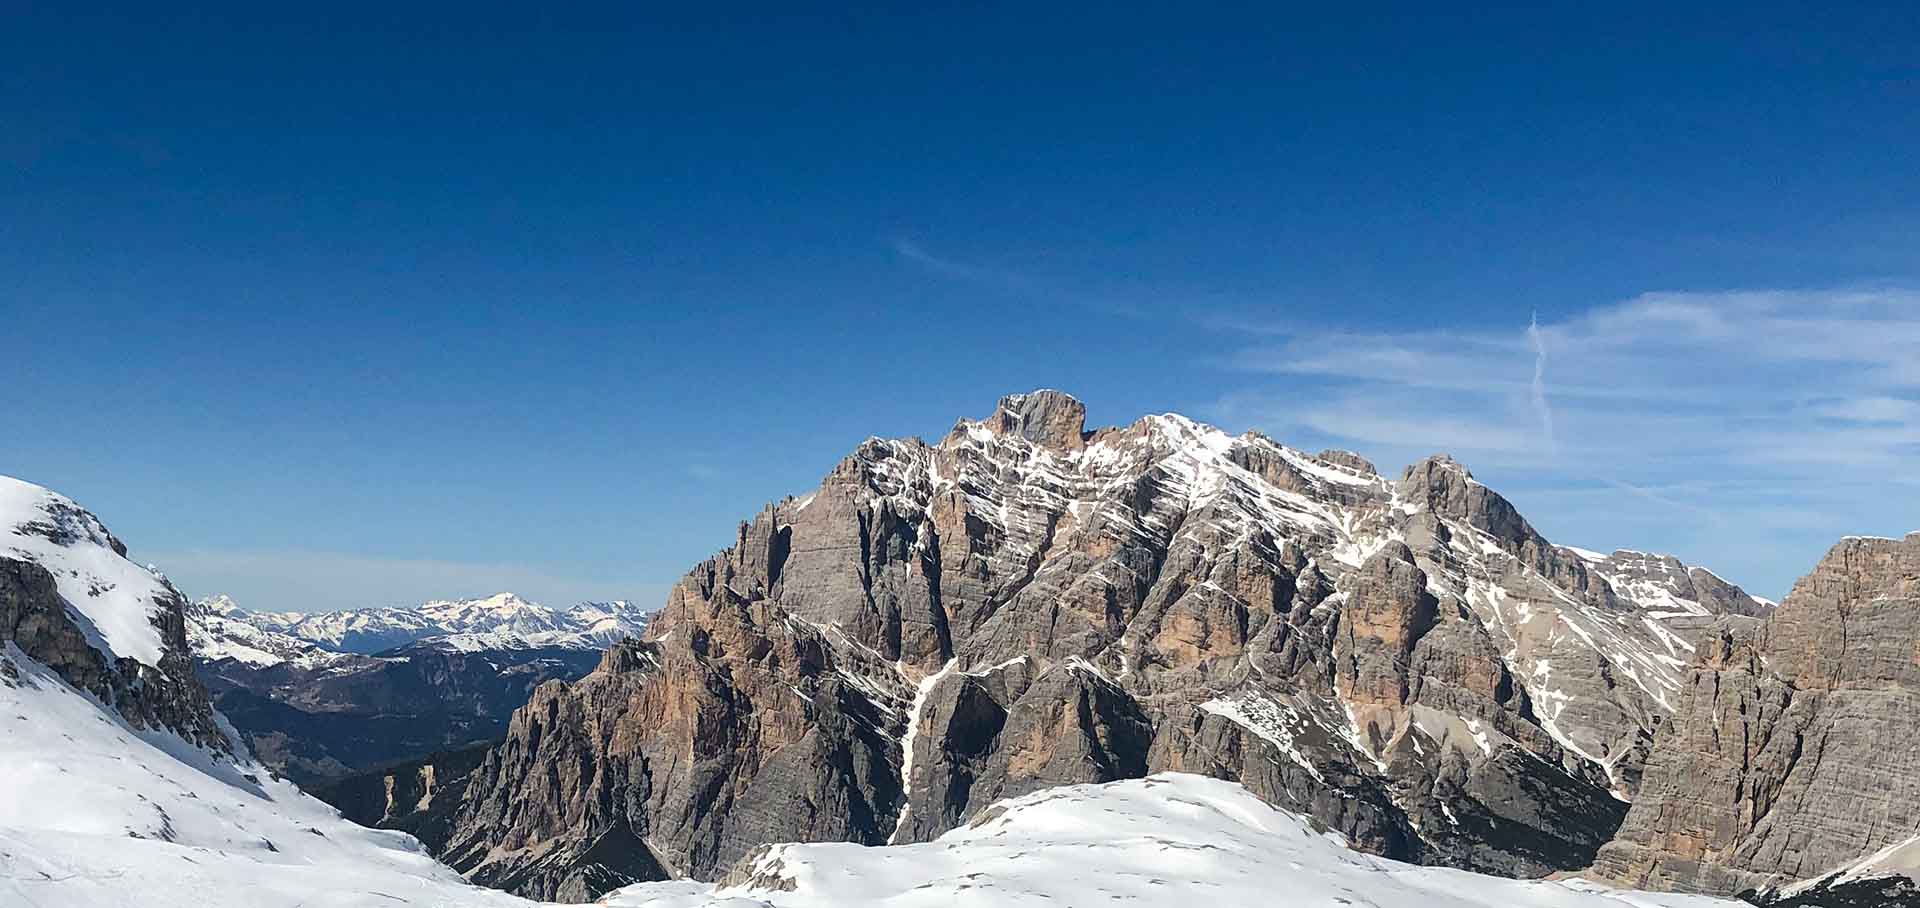 Armentarola ski slope / Cortina d'Ampezzo